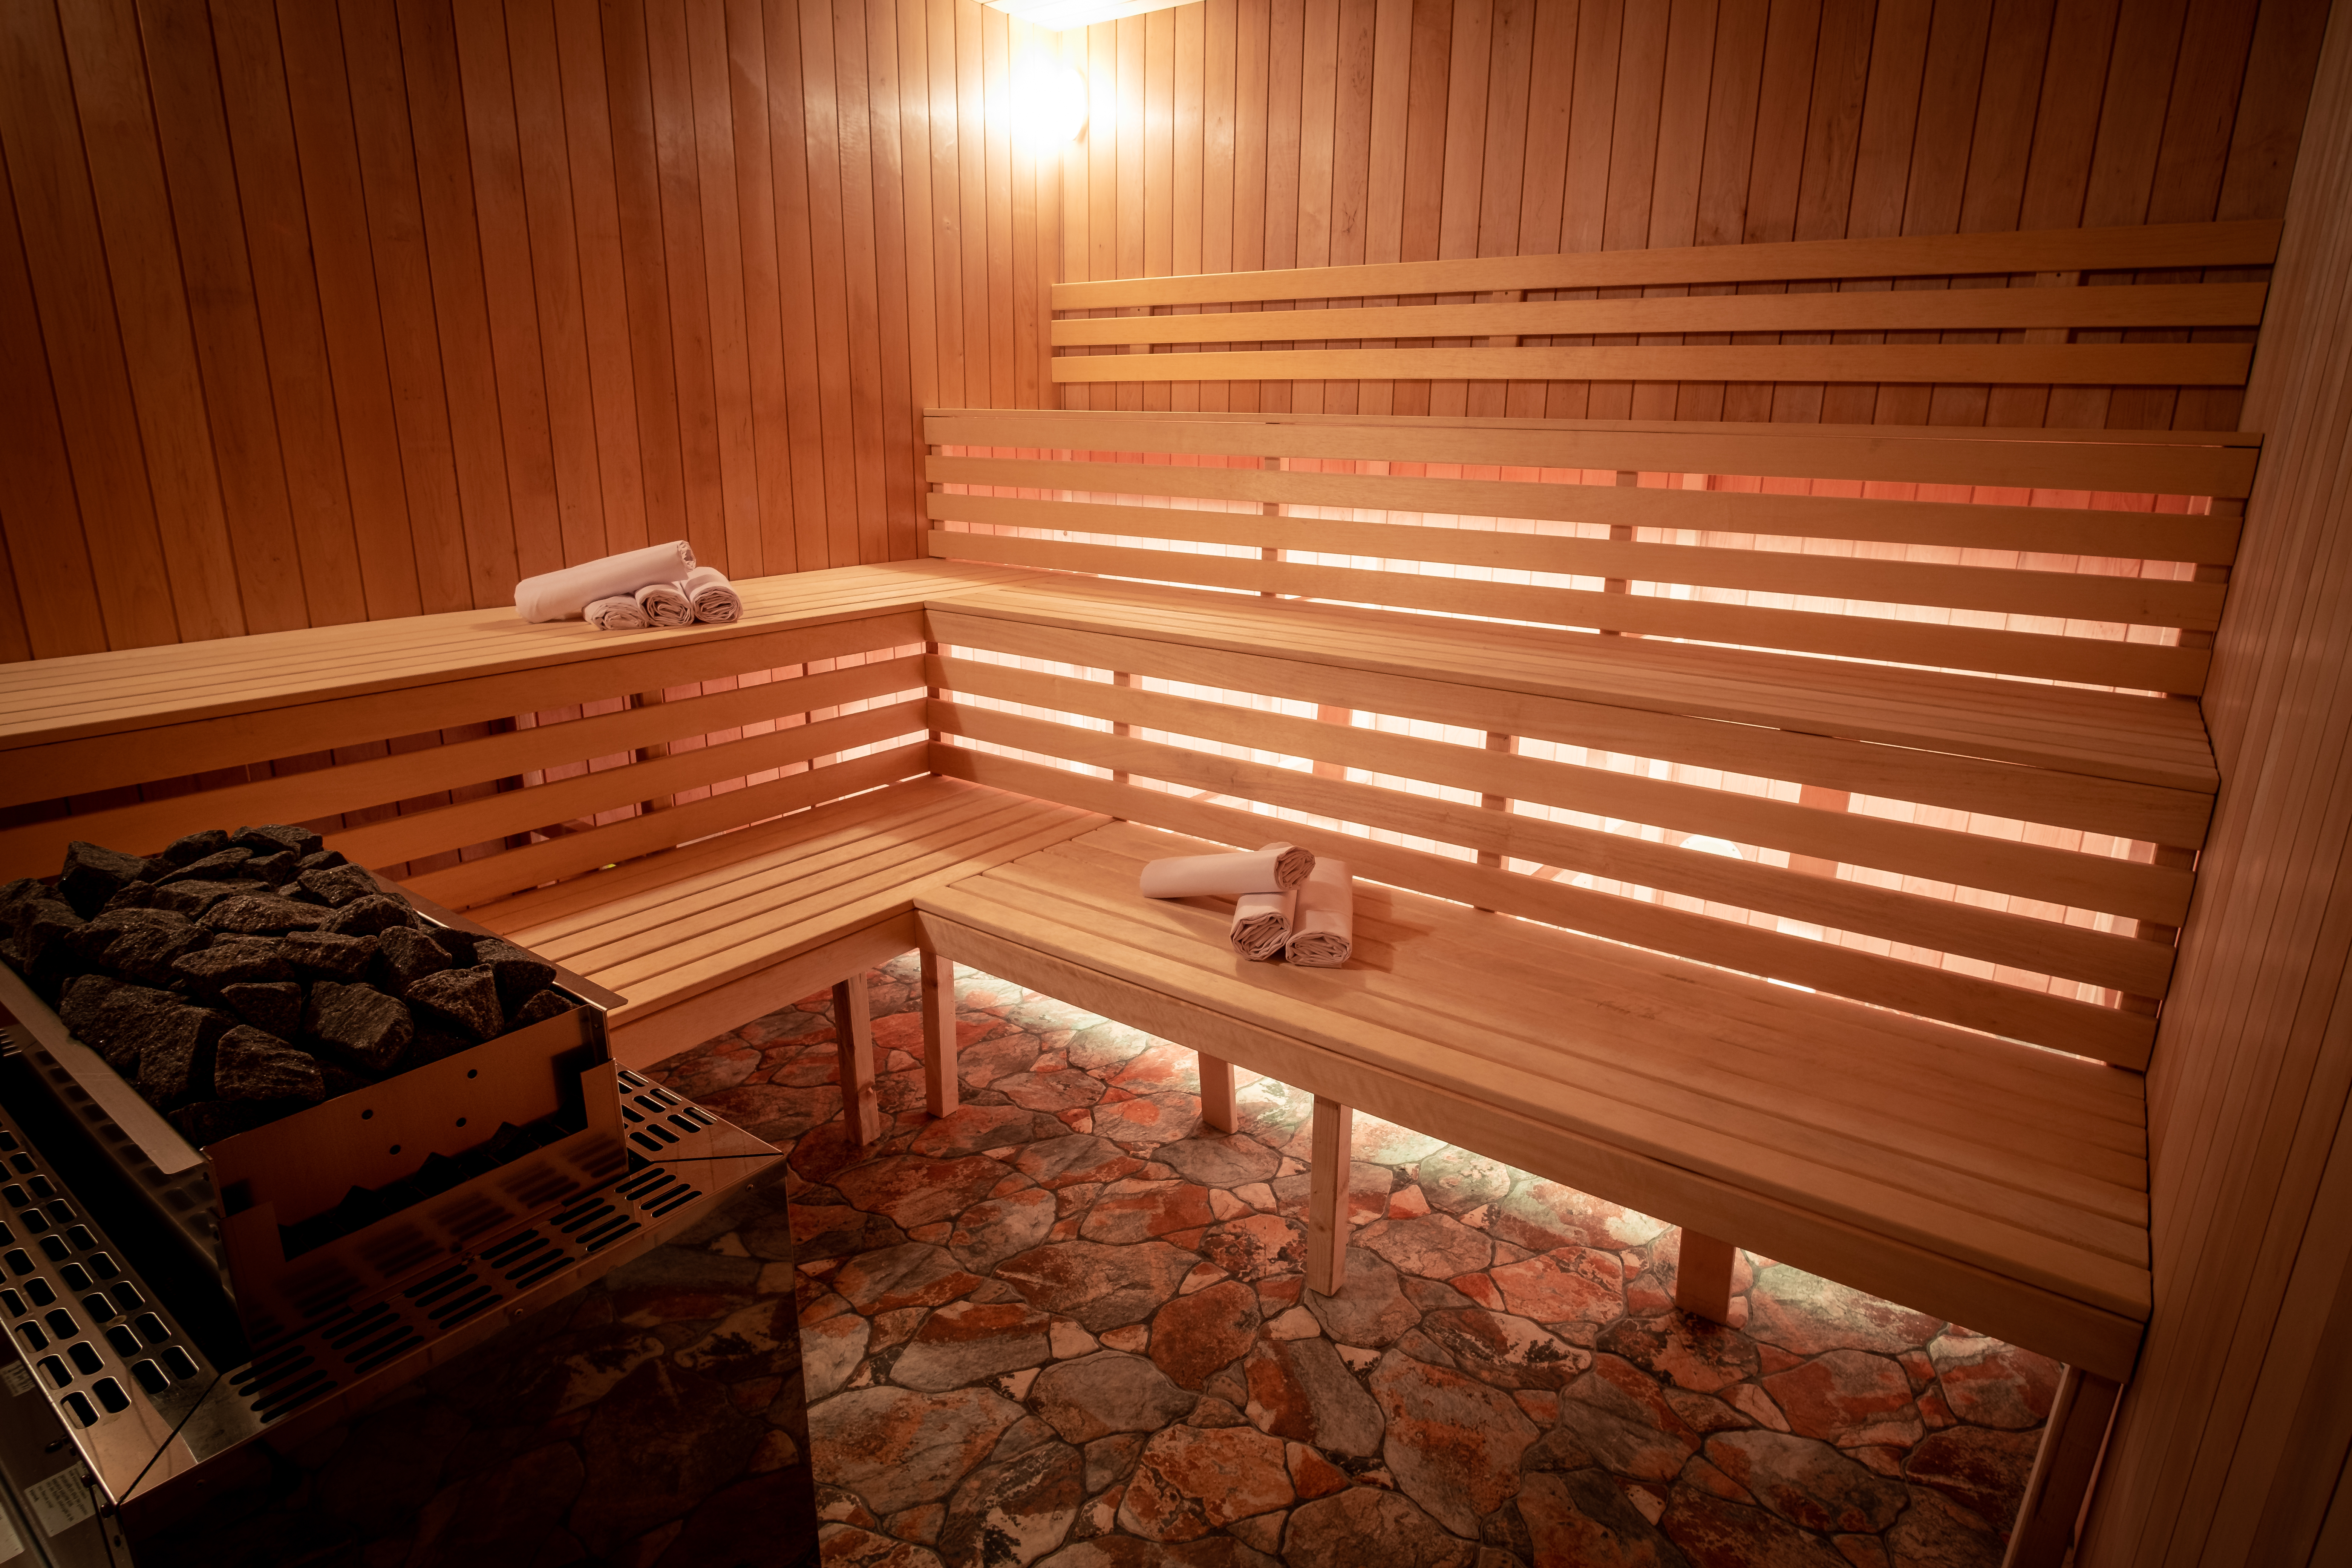 Inside of a sauna